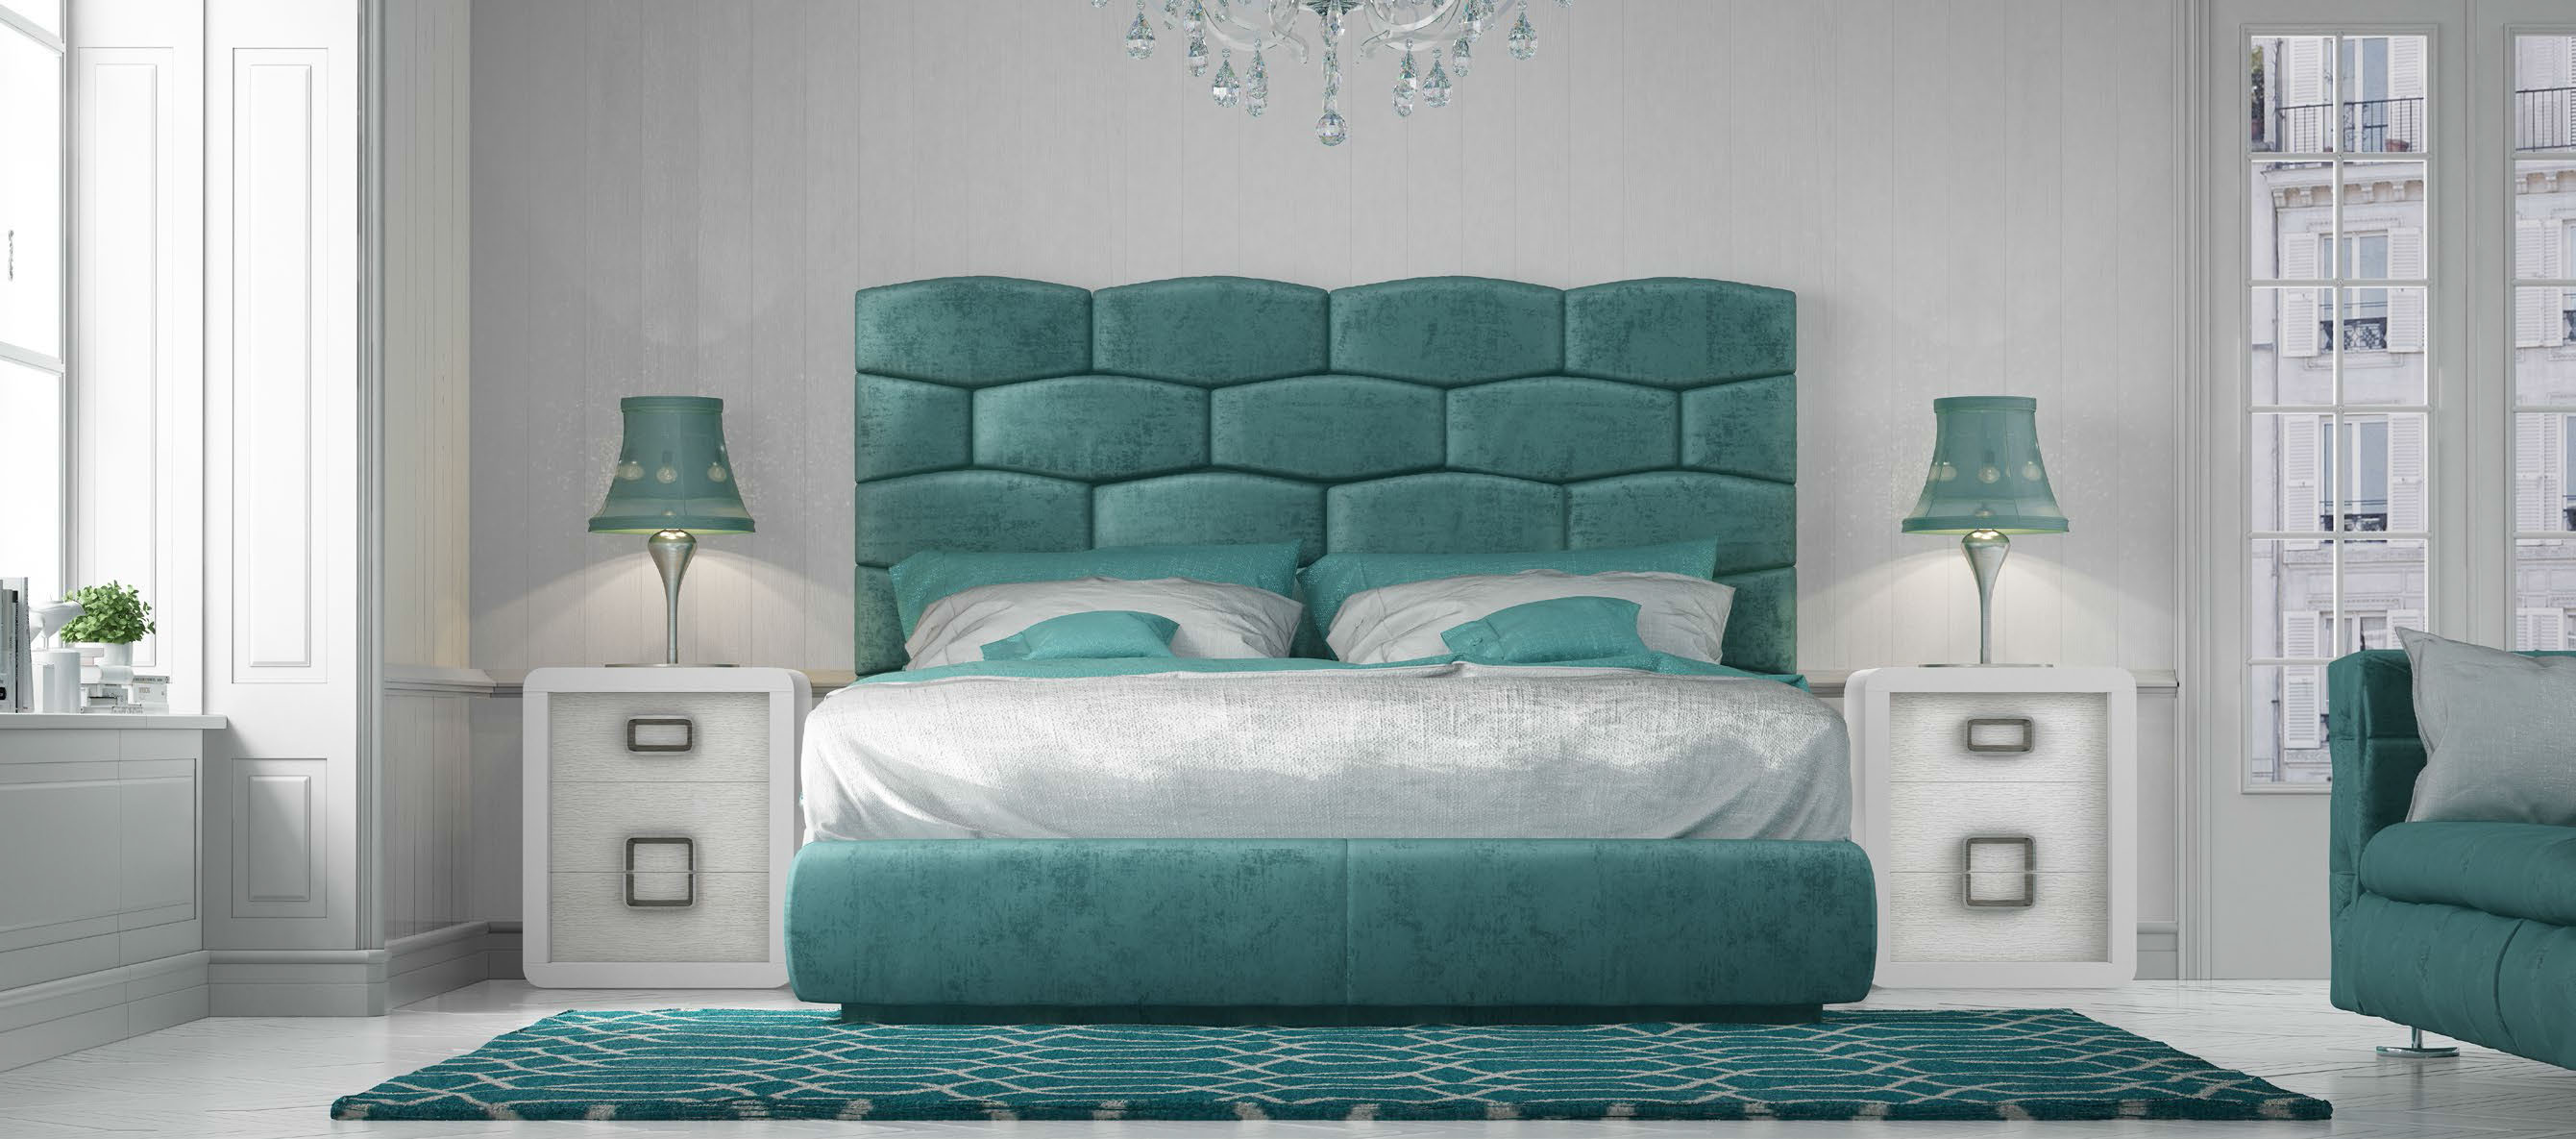 Brands Franco Furniture Bedrooms vol1, Spain DOR 178